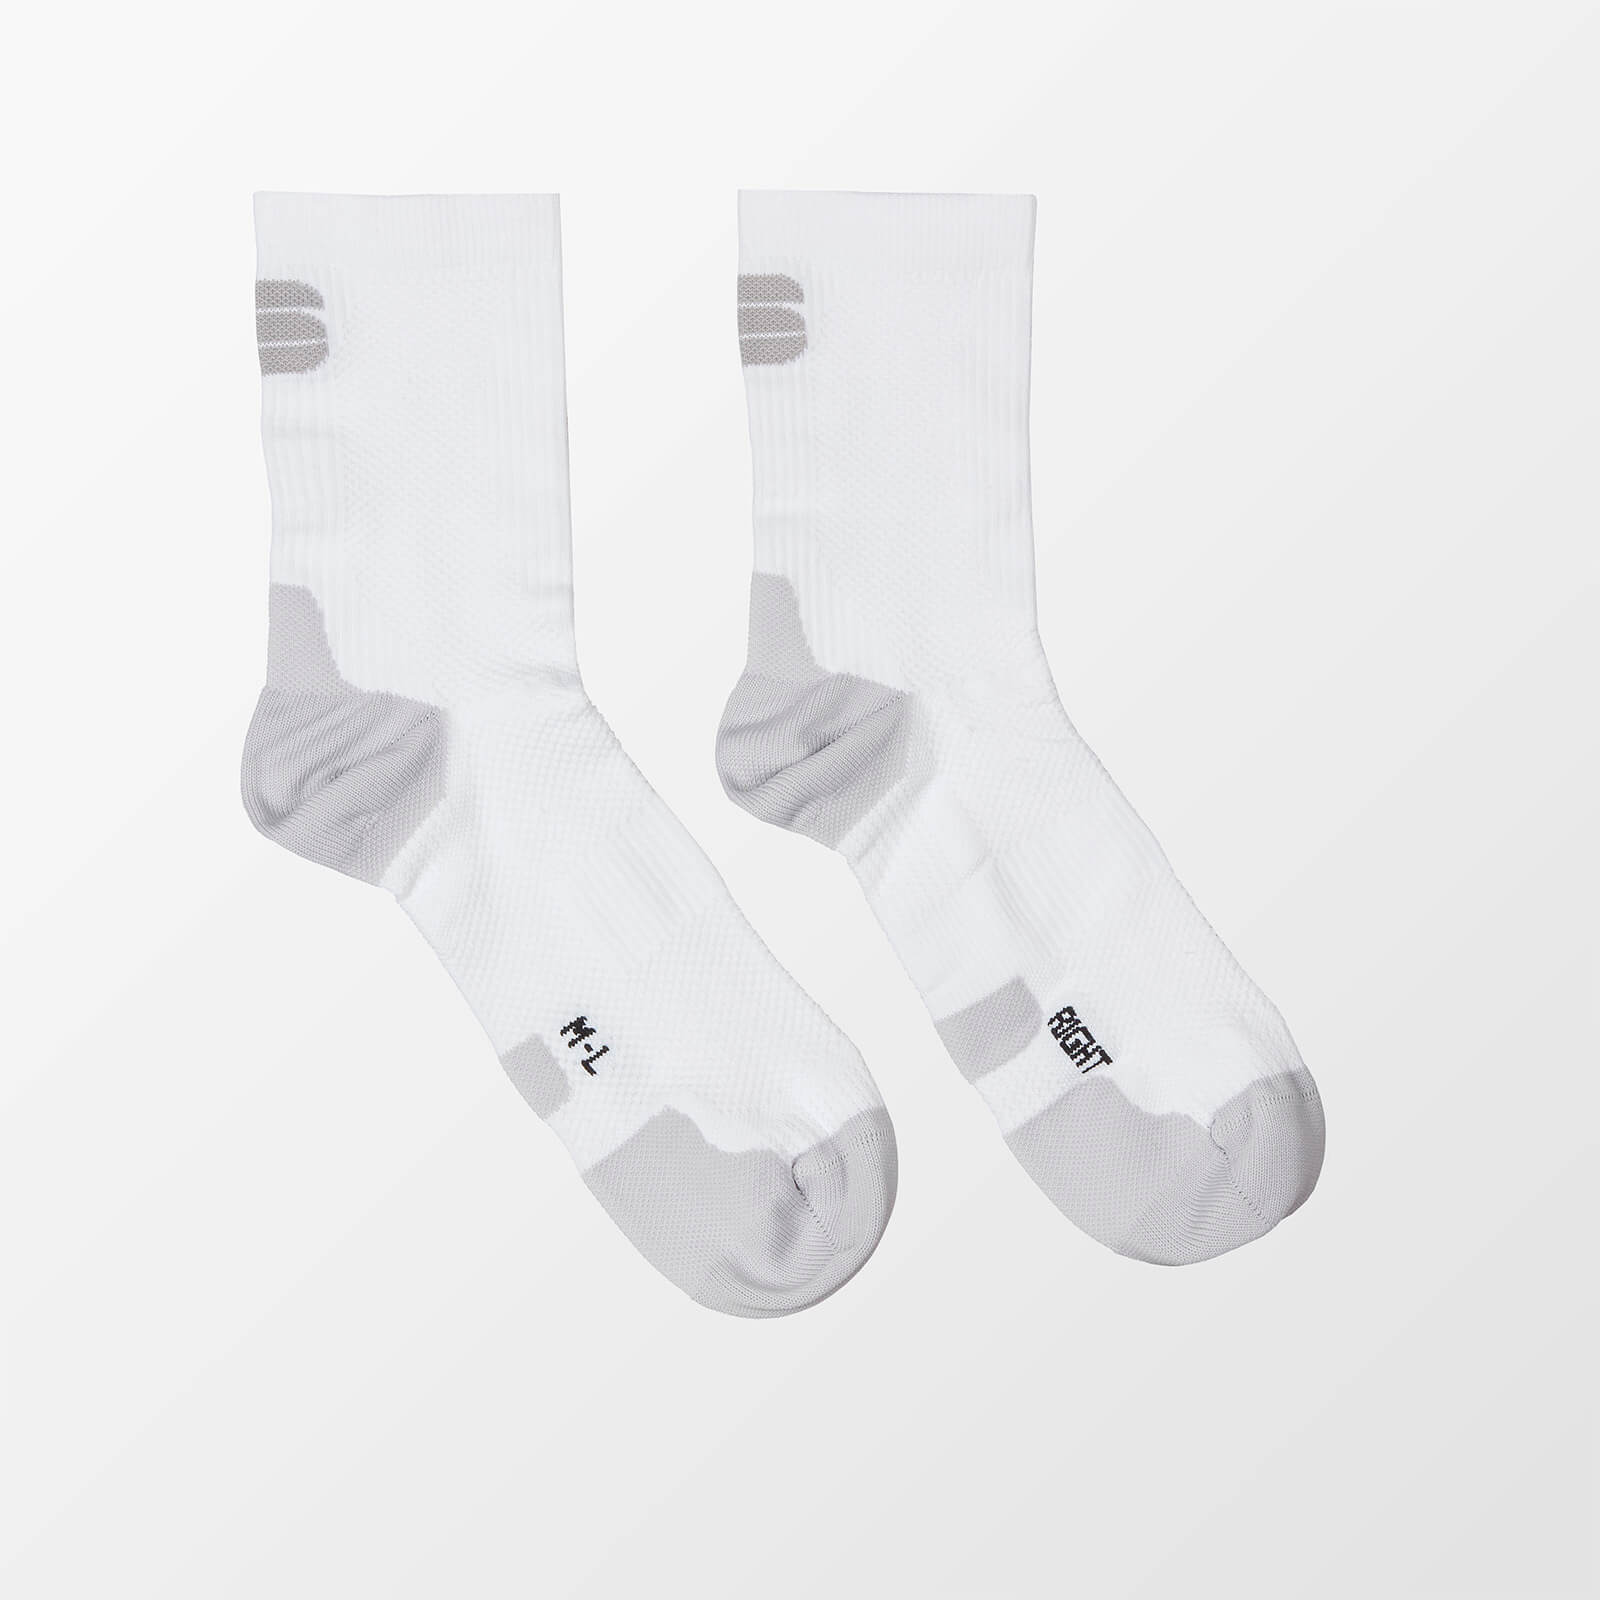 Sportful Bodyfit Pro 2 Socks - S - White